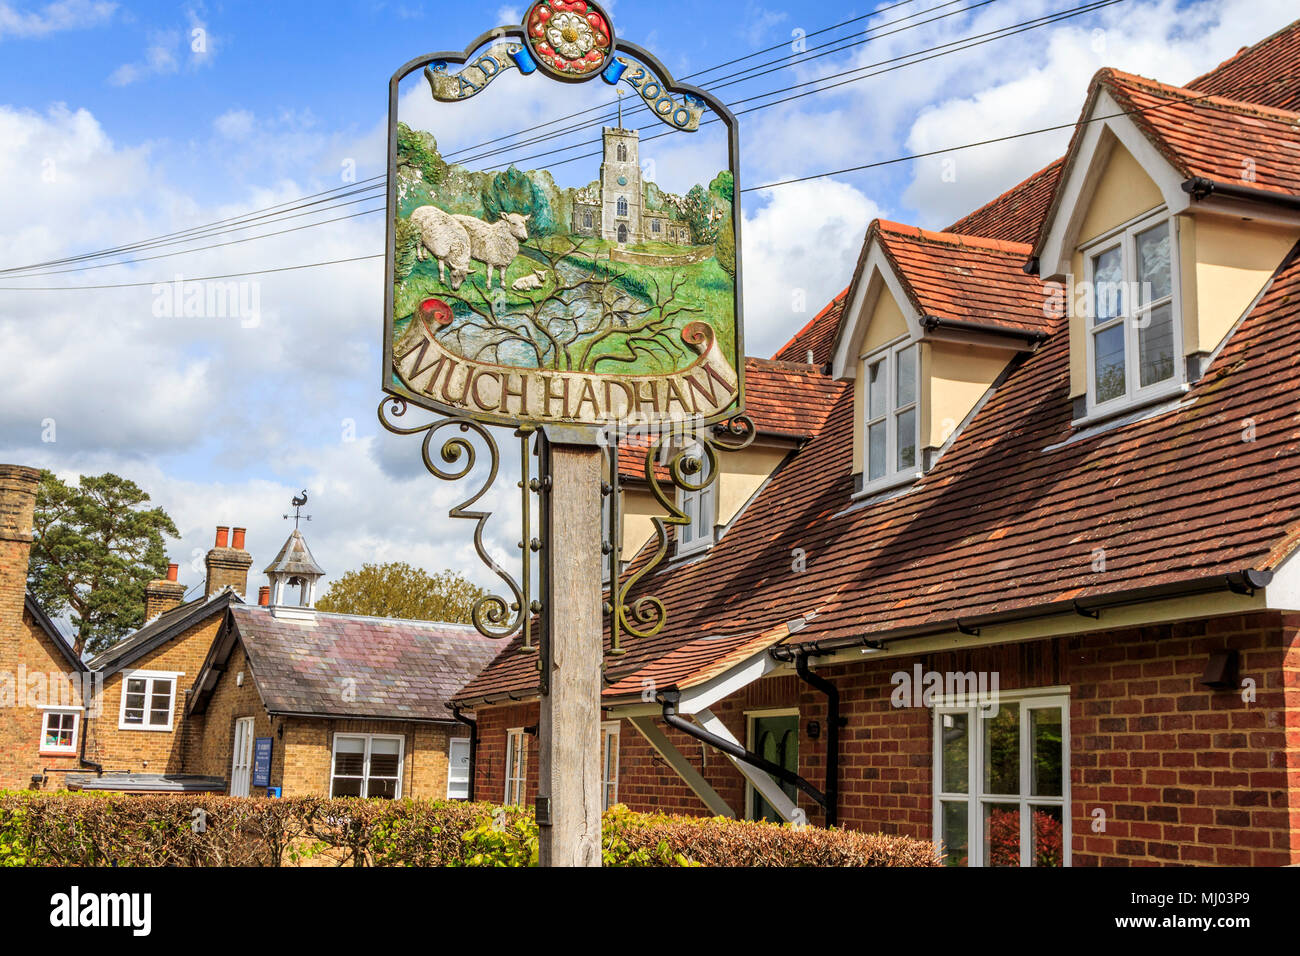 Signo ornamental, bonita y deseable de aldea mucho hadham High street hertfordshire, Herts, Inglaterra.uk,gb Foto de stock